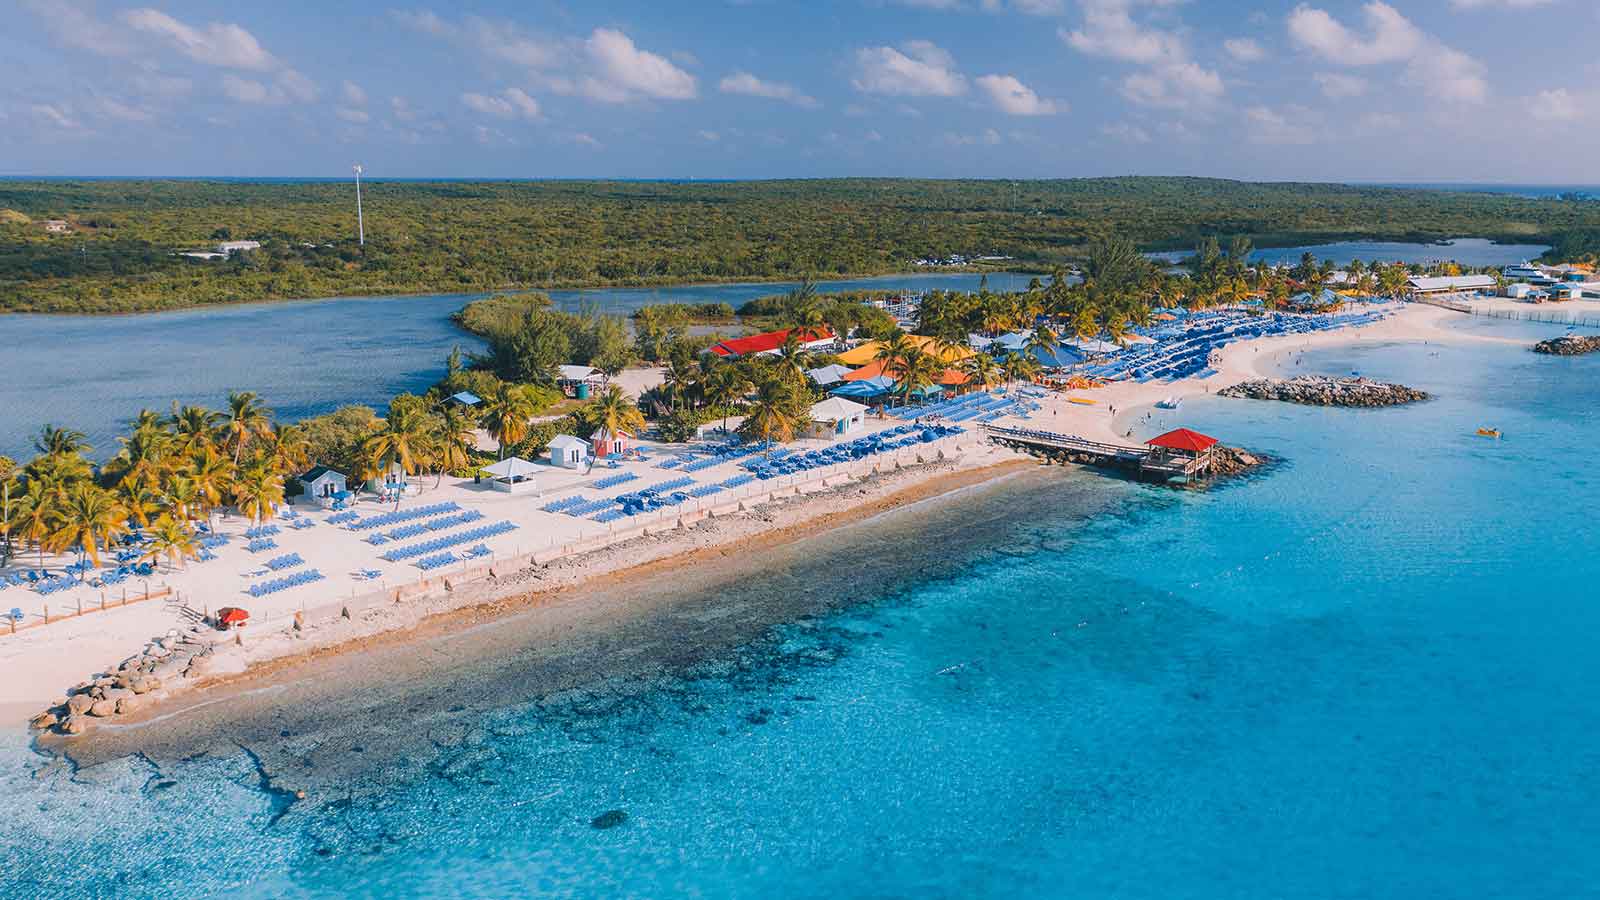 Princess Cays, Princess’ Private Island Resort in the Bahamas